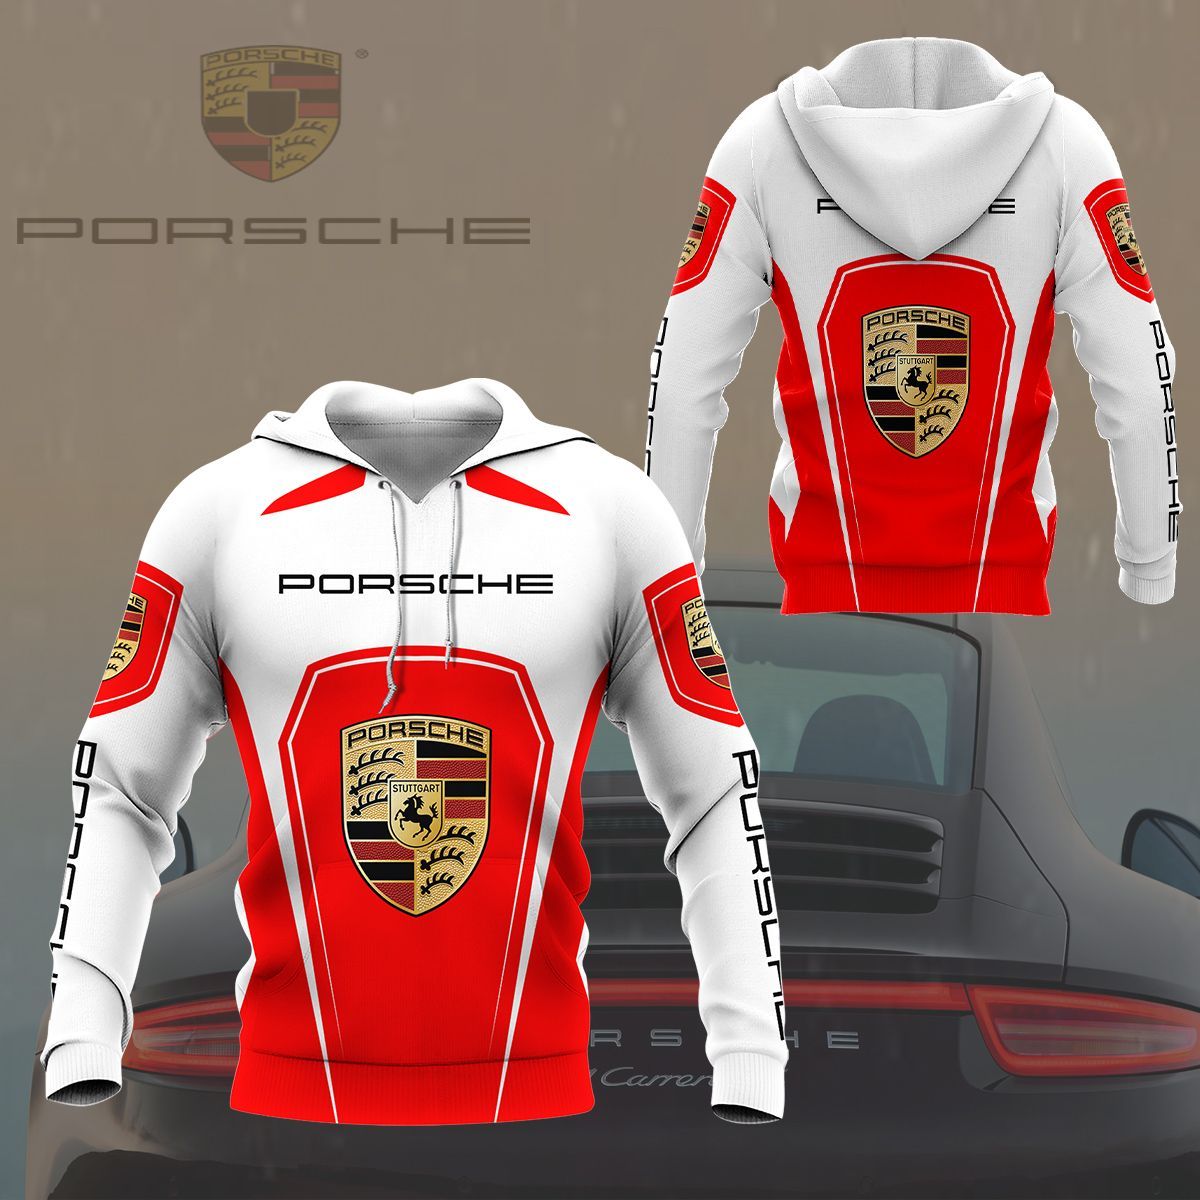 3D All Over Printed Porsche Tnt-Hl Shirts Ver 1 (Red)